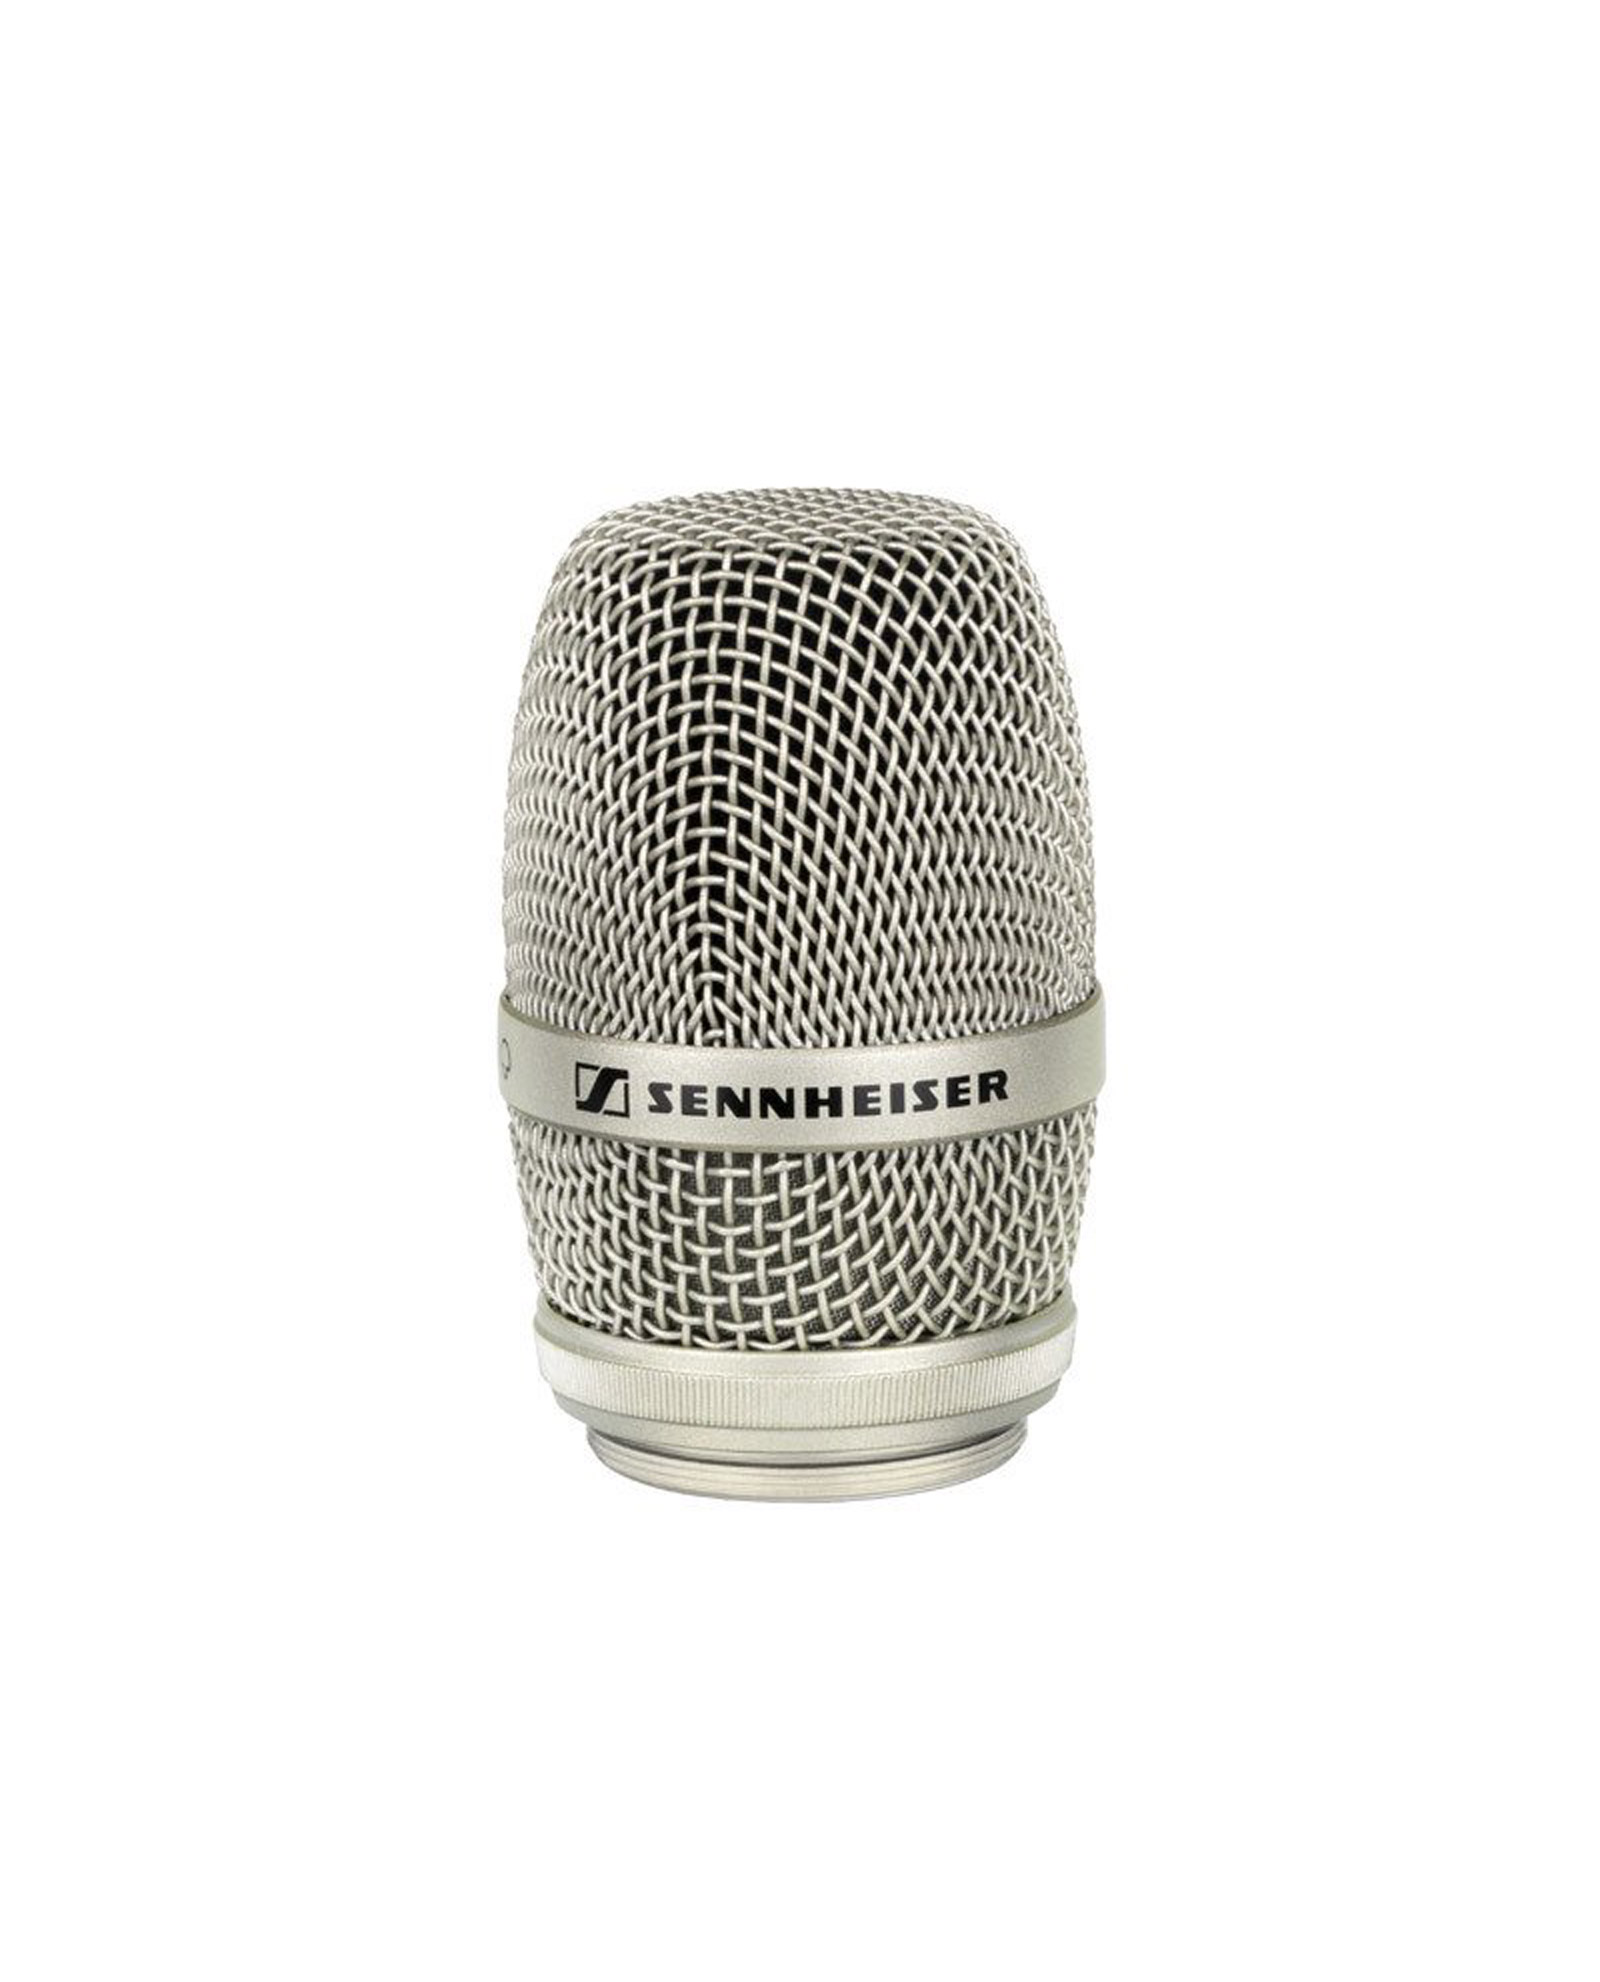 Sennheiser Mmk 965 Ni Flagship True Condenser Microphone Capsule